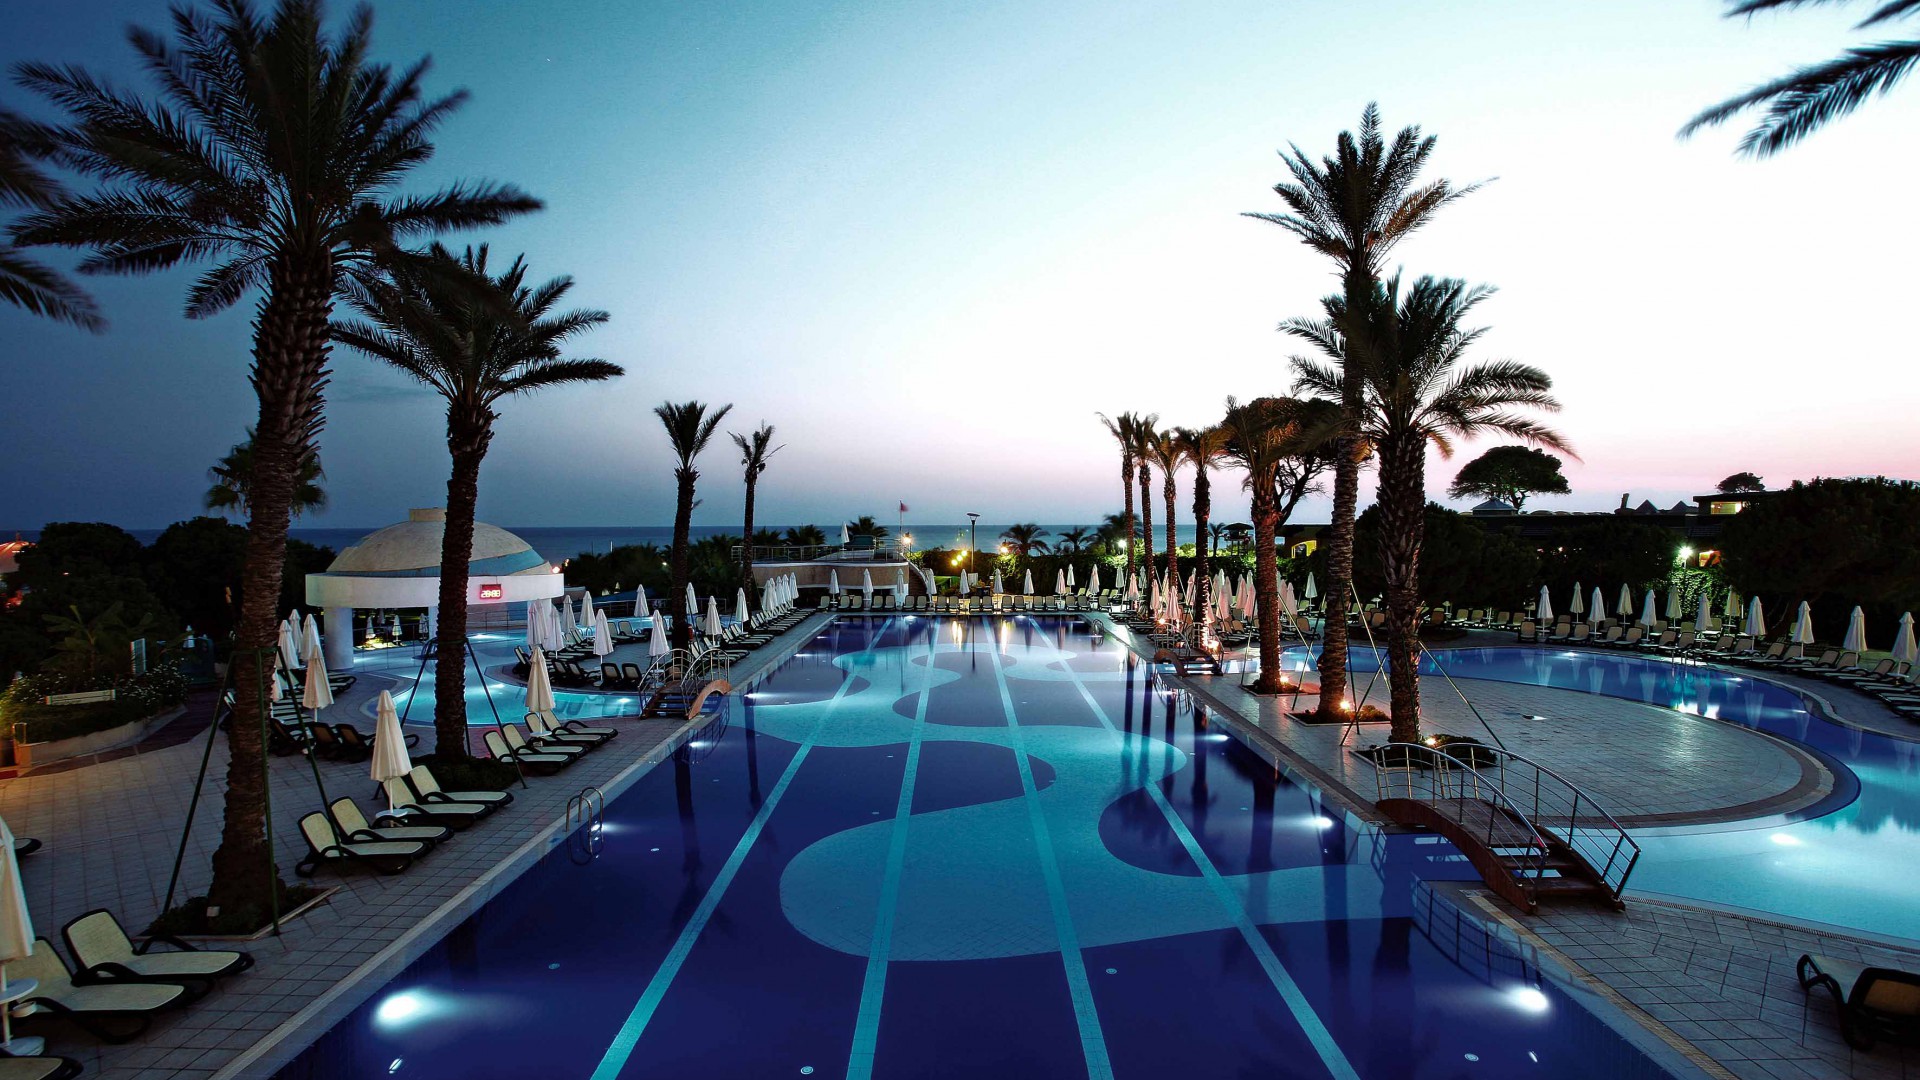 Limak Atlantis De Luxe Hotel, The best hotel pools 2017, tourism, travel, resort, vacation, pool, palms, sunbed (horizontal)